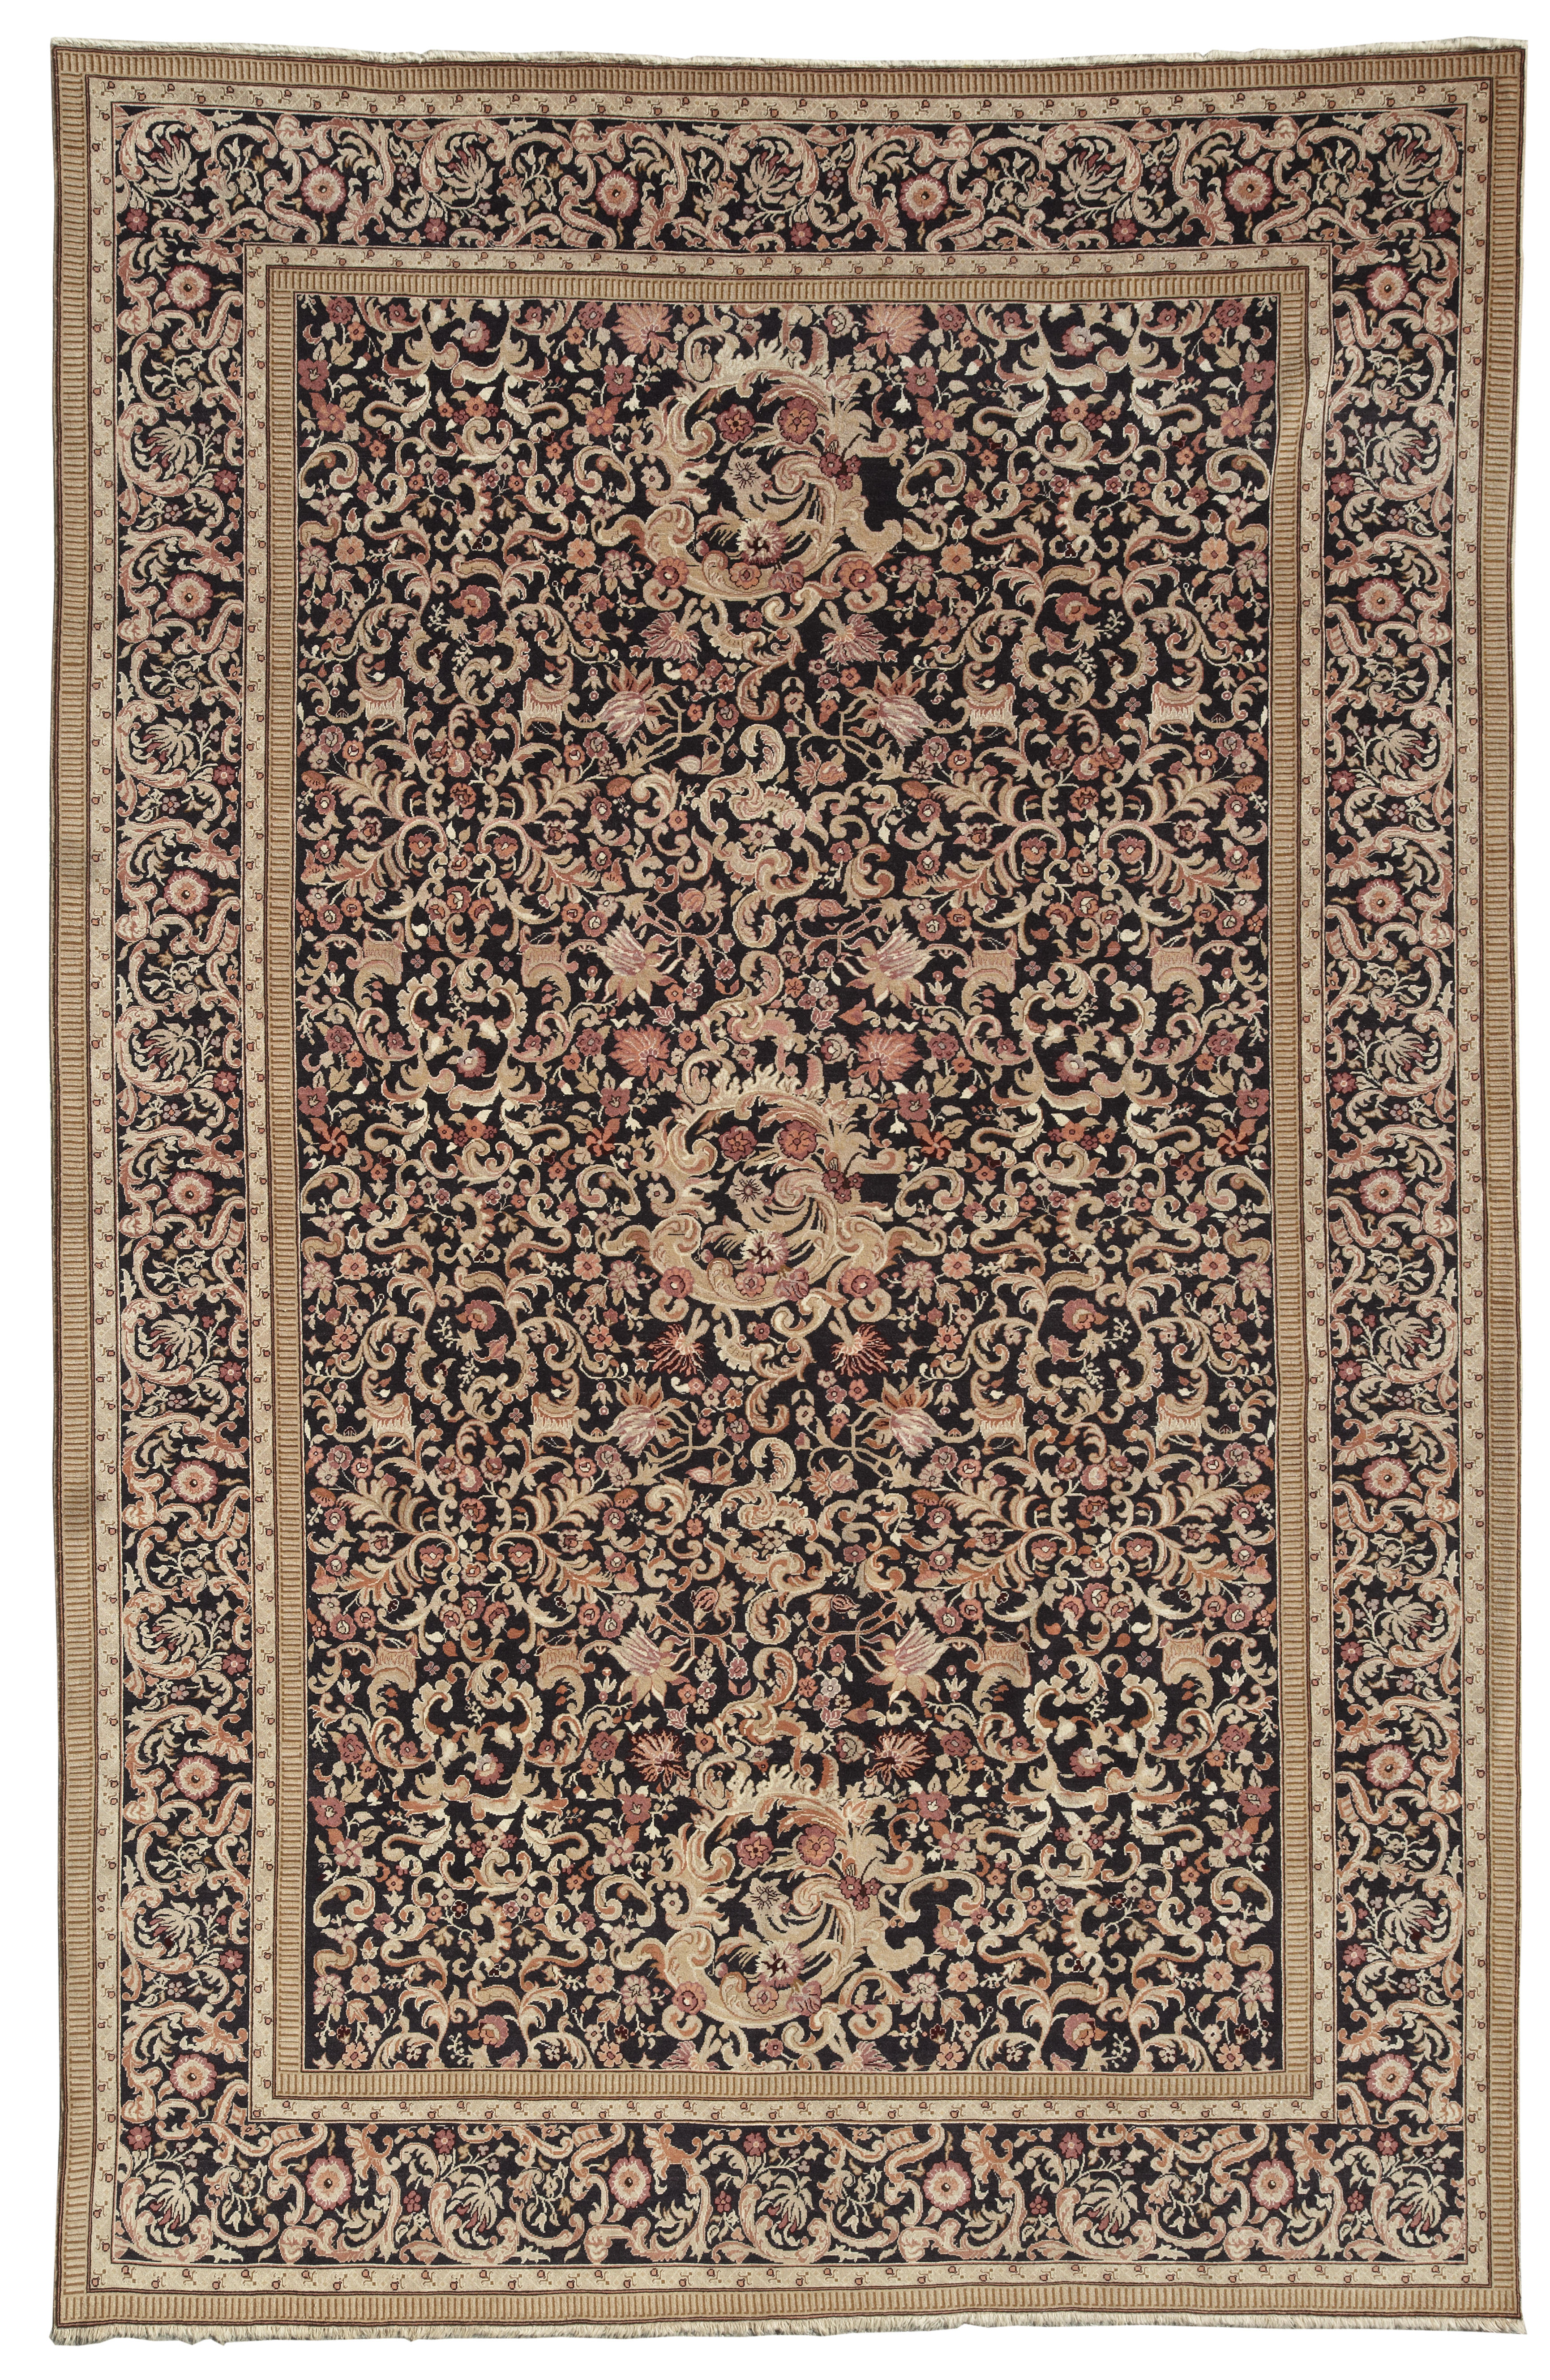 A machine made Persian style carpet 12addc